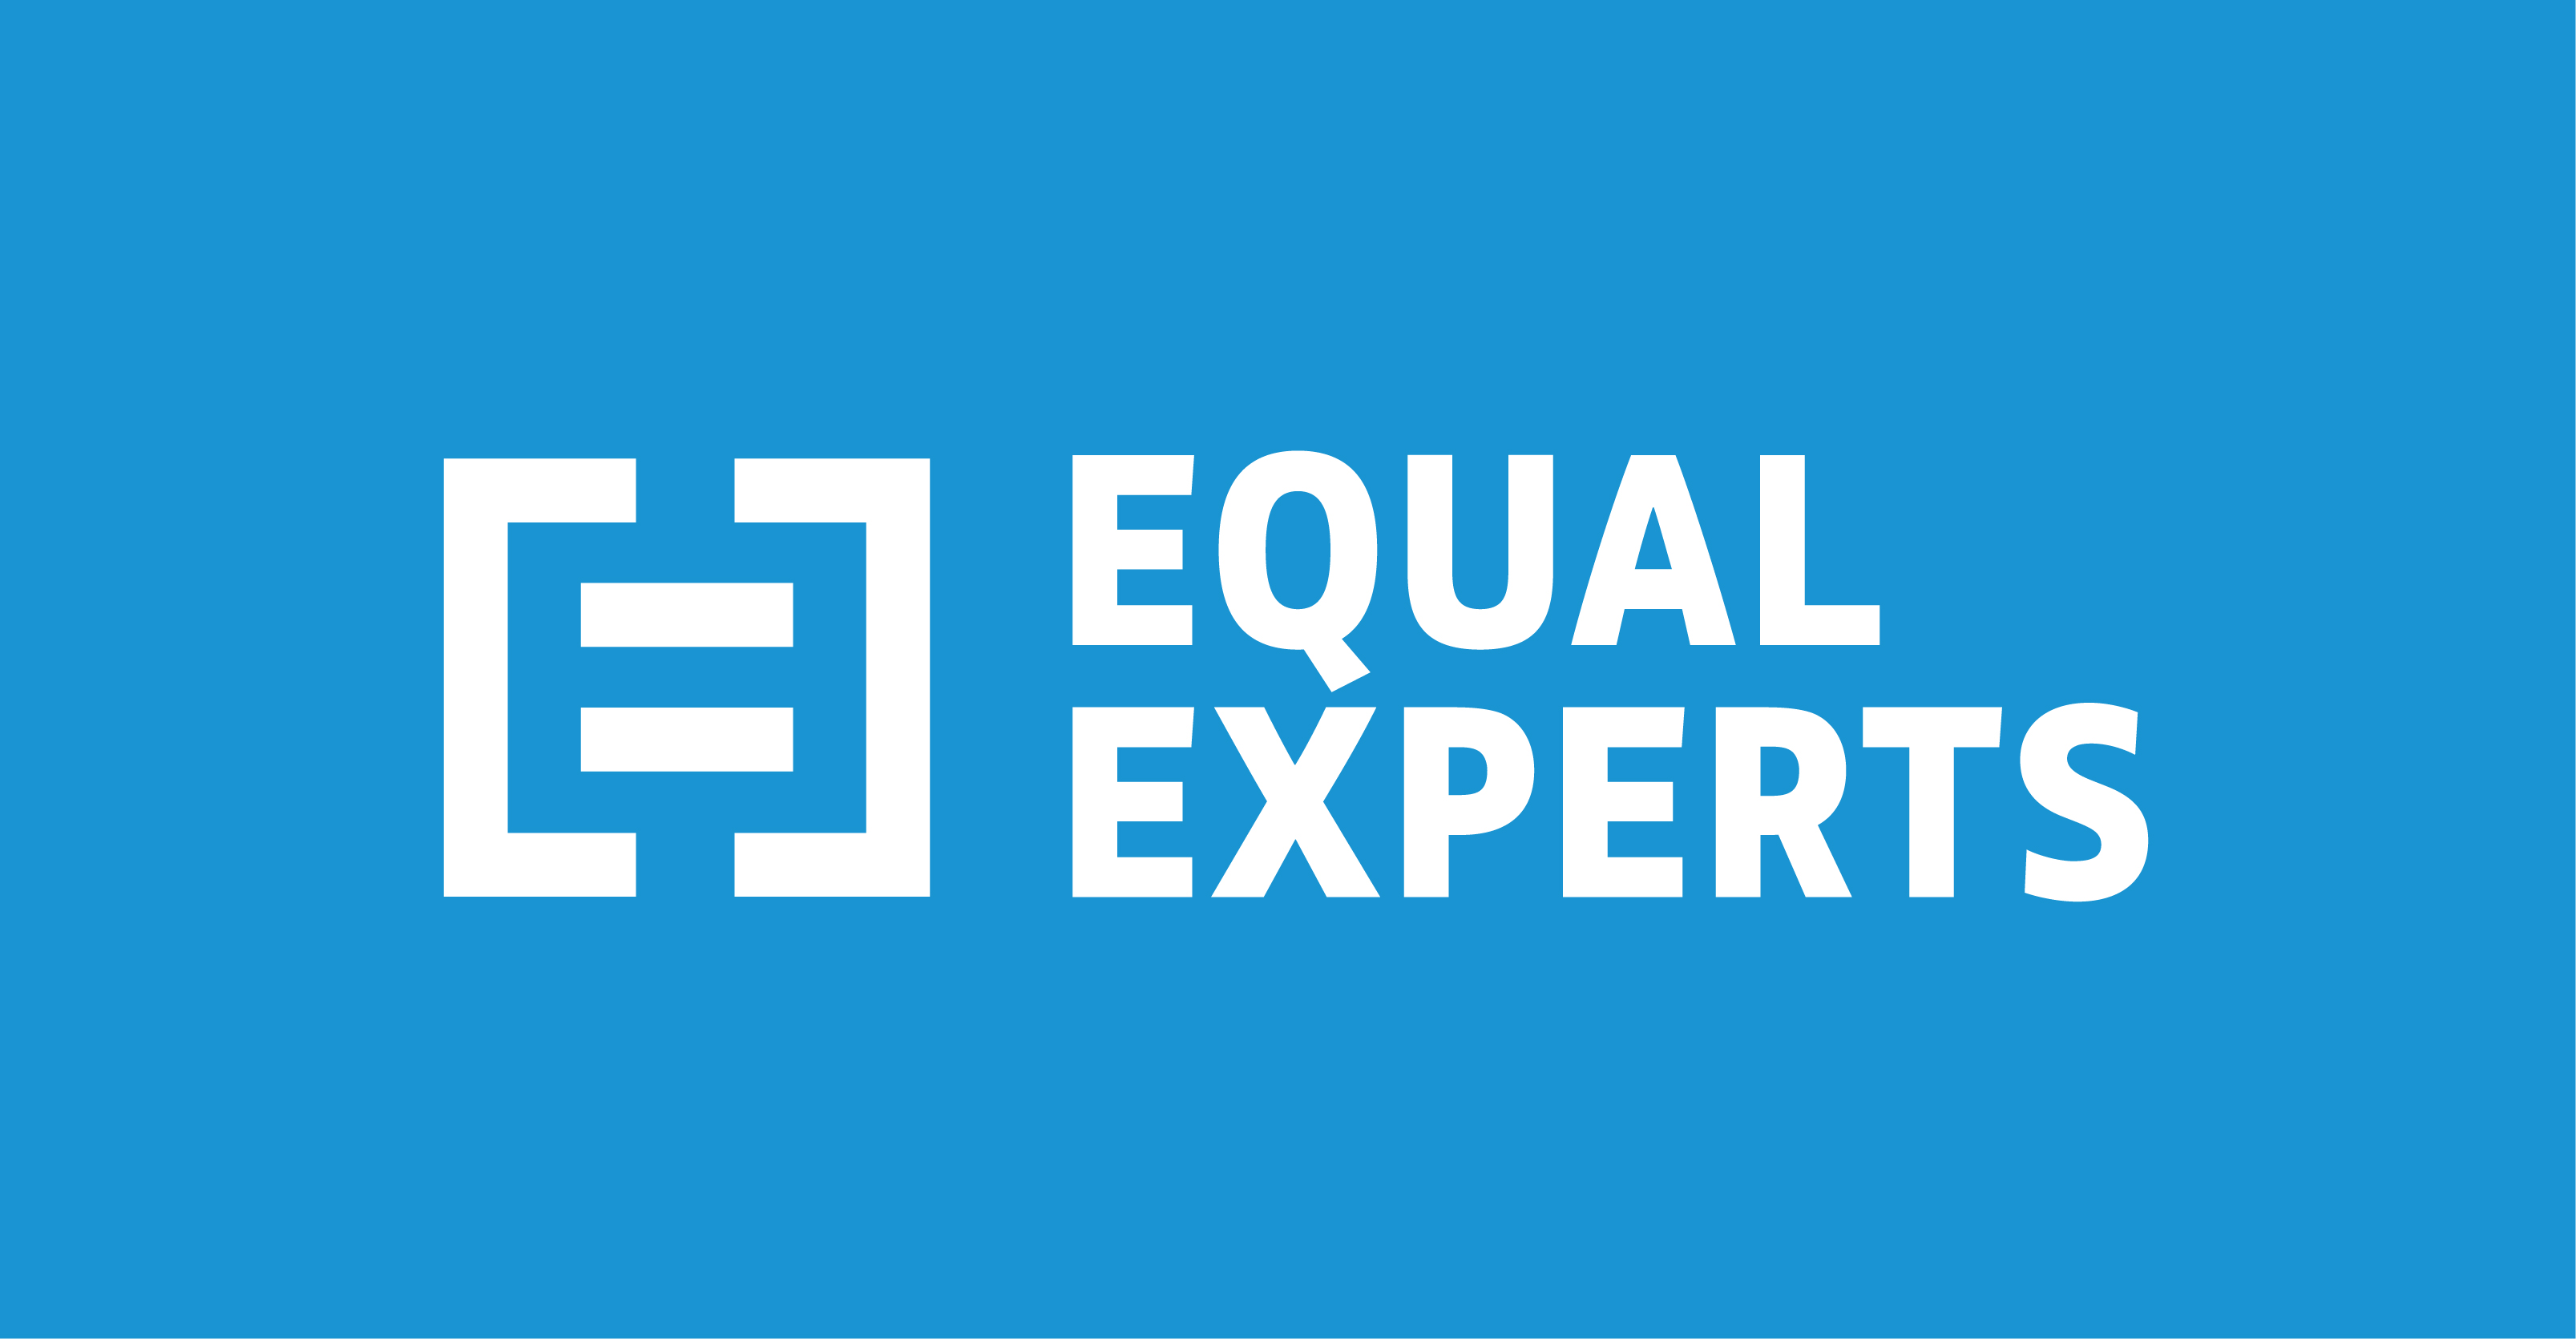 Equal Experts white logo on blue background